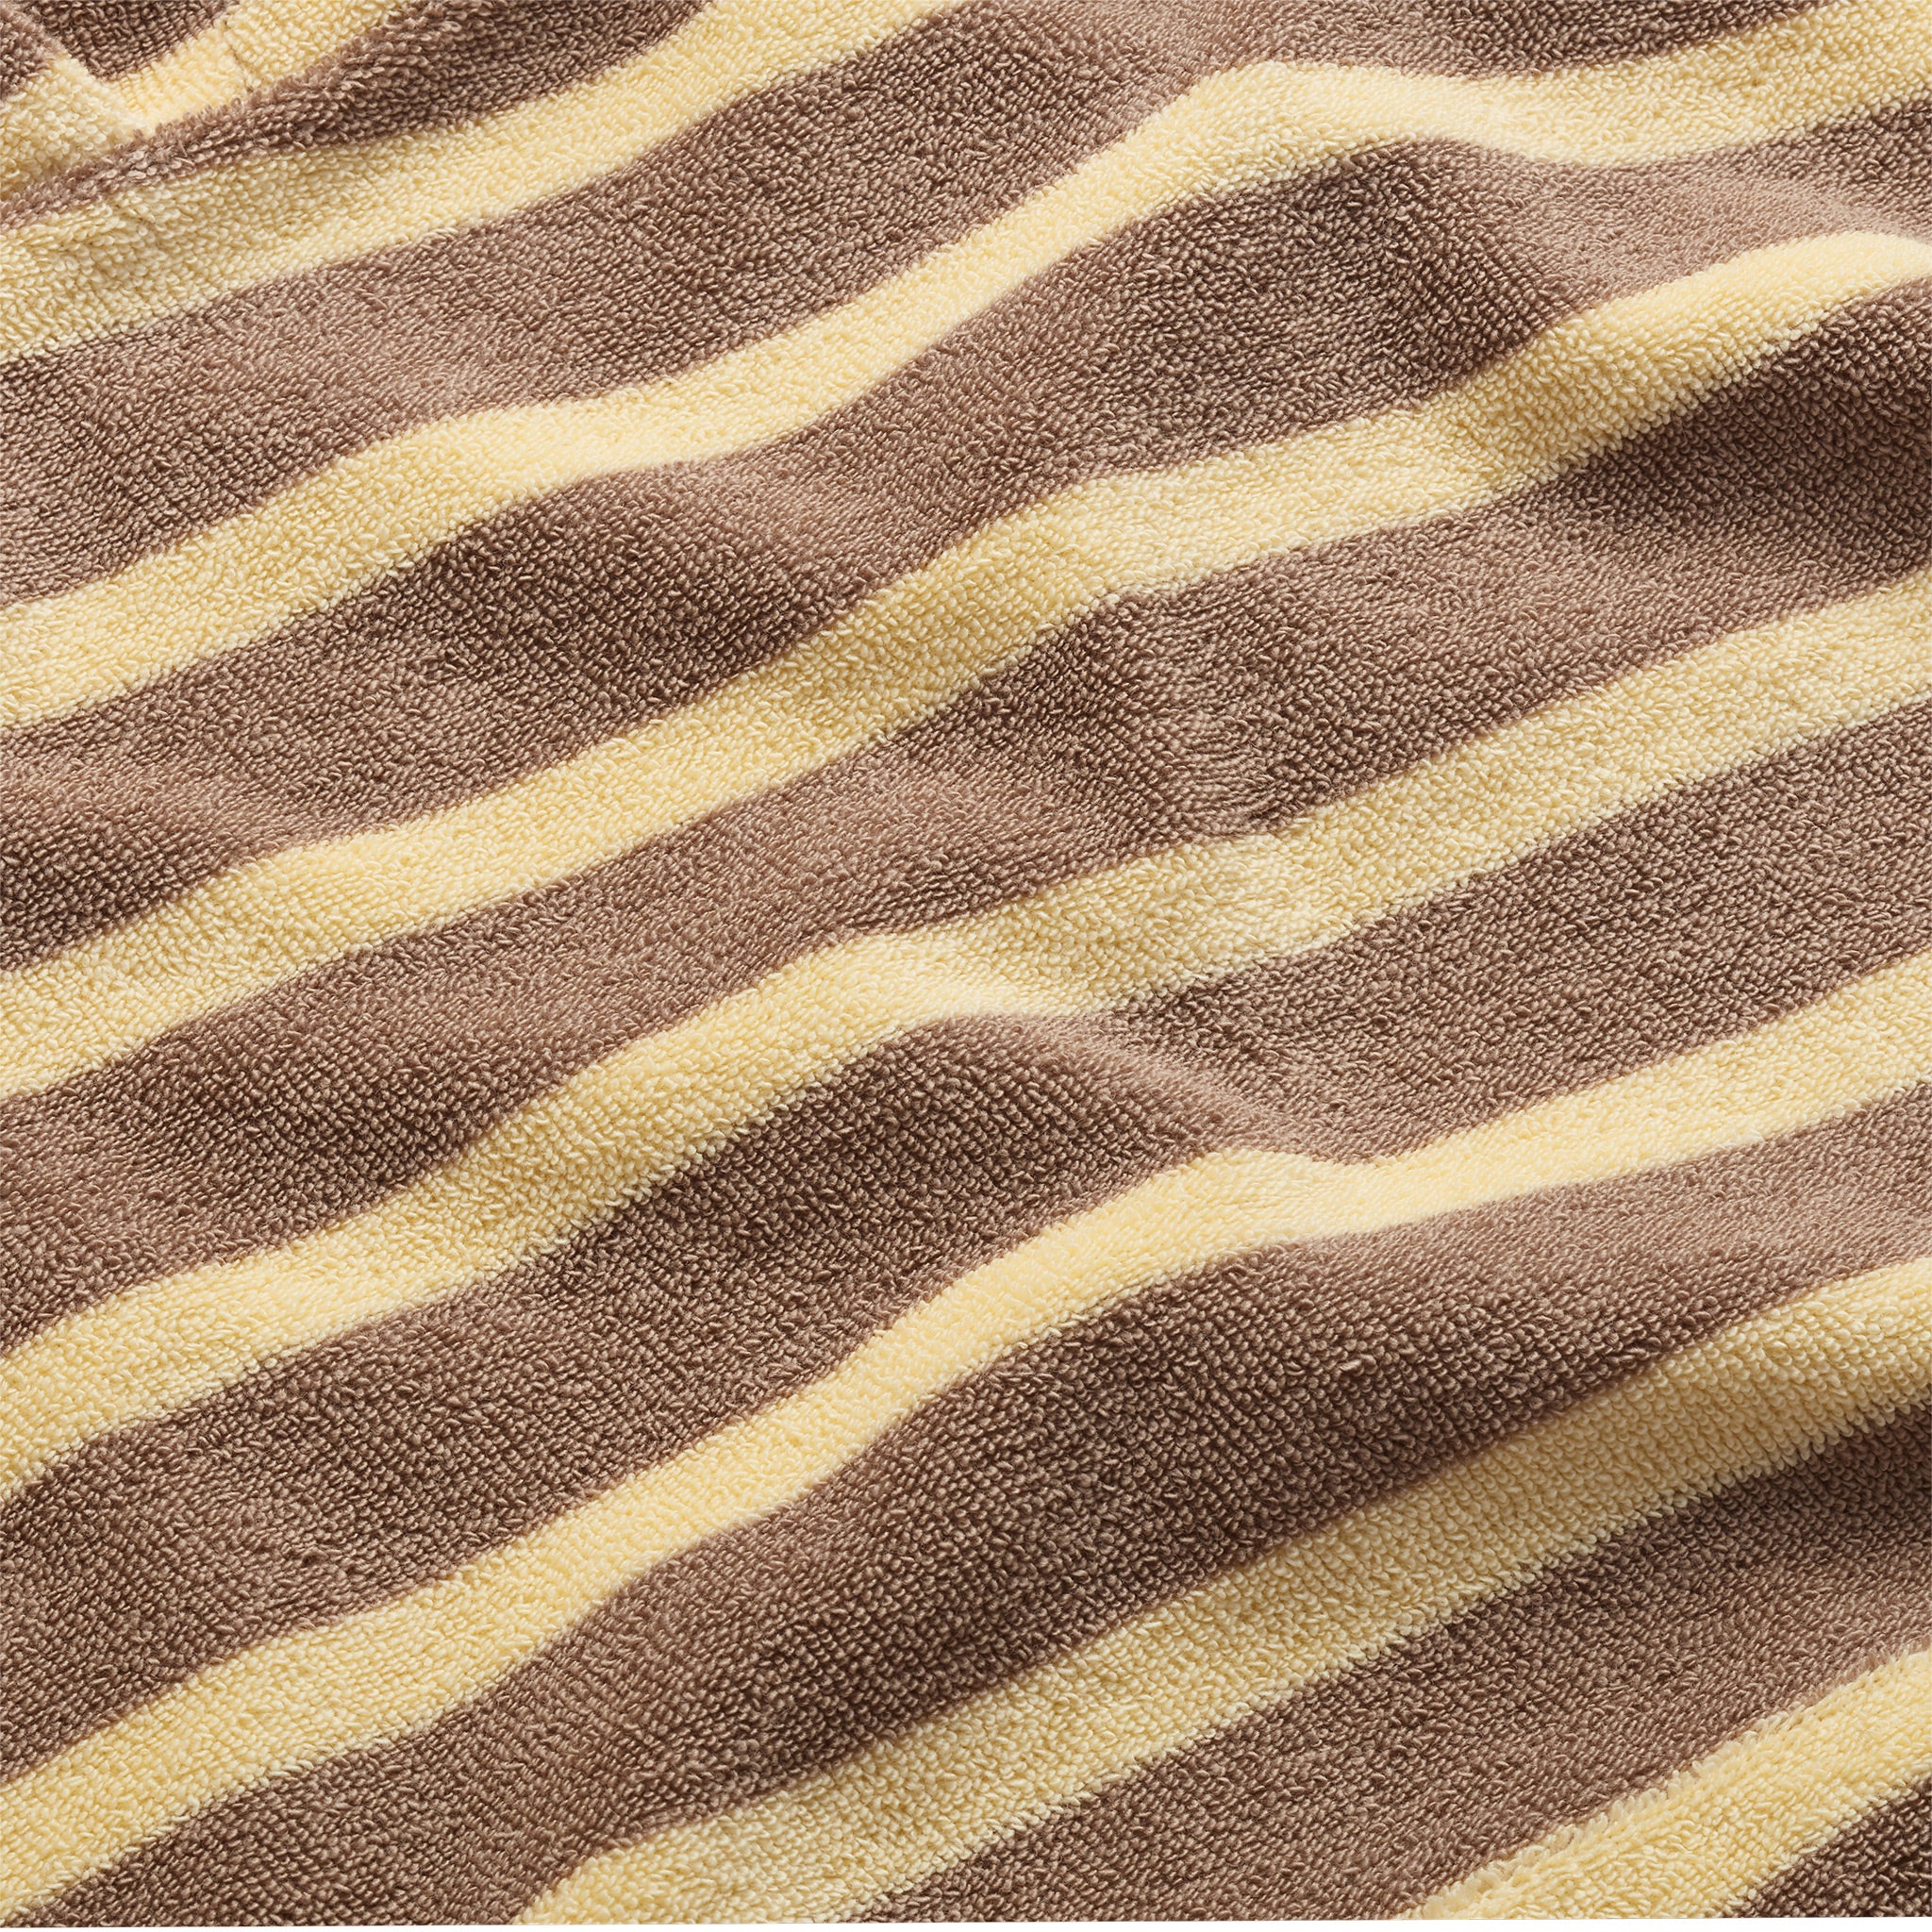 T-Shirt Toweling Mushroom Stripes